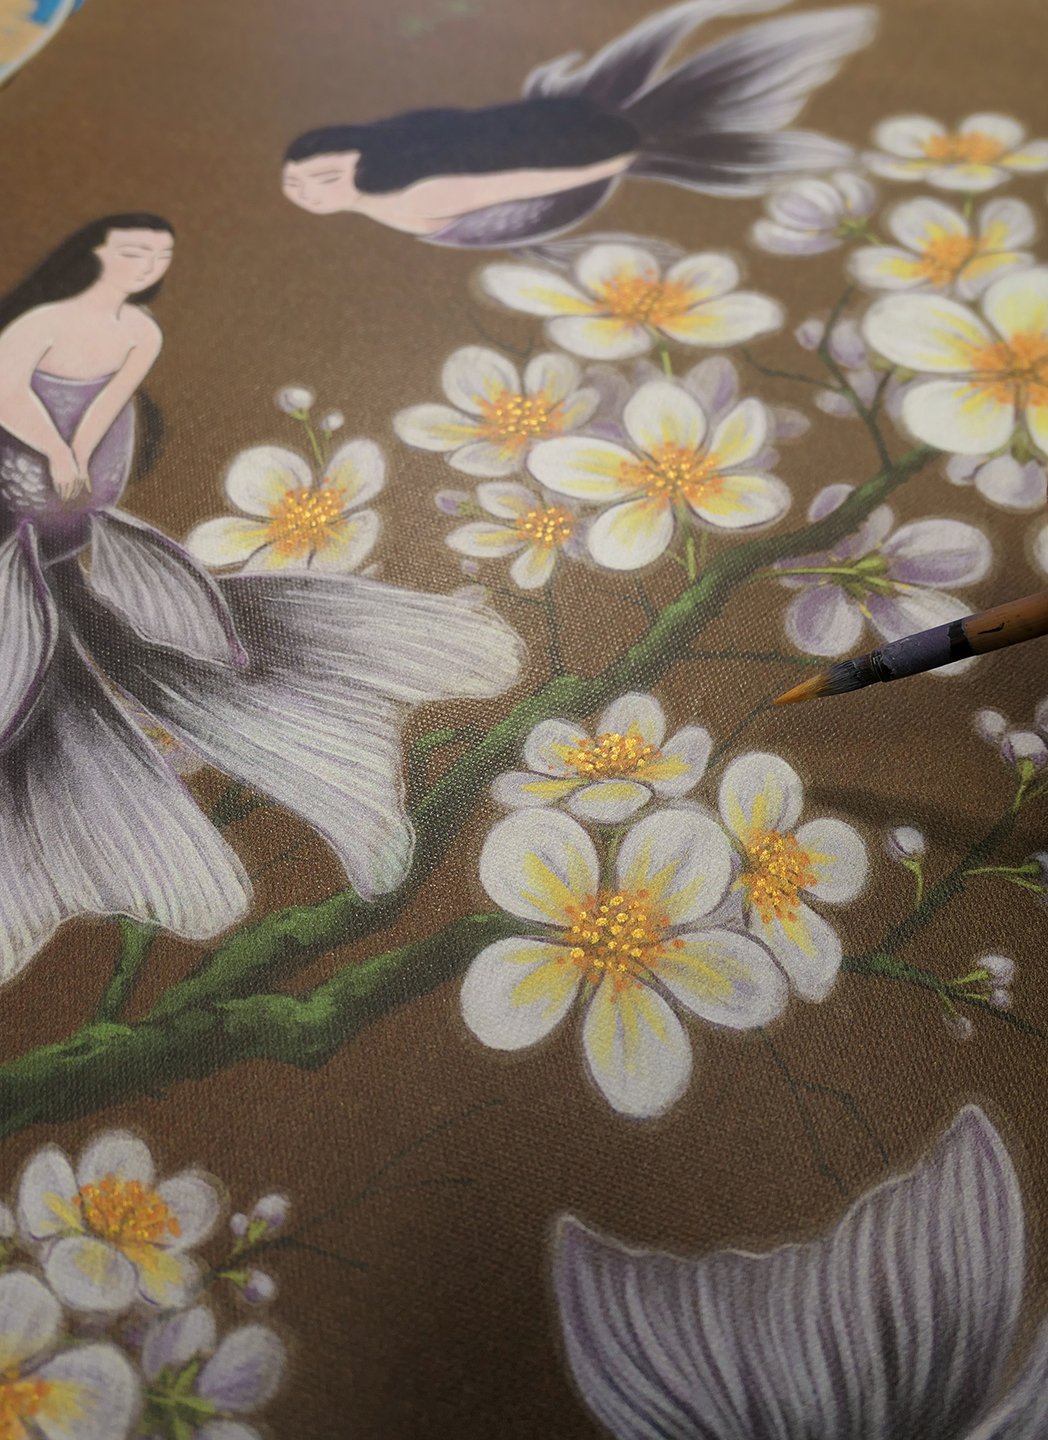 1/1 Mermaids and Plum Blossoms Original Canvas Print